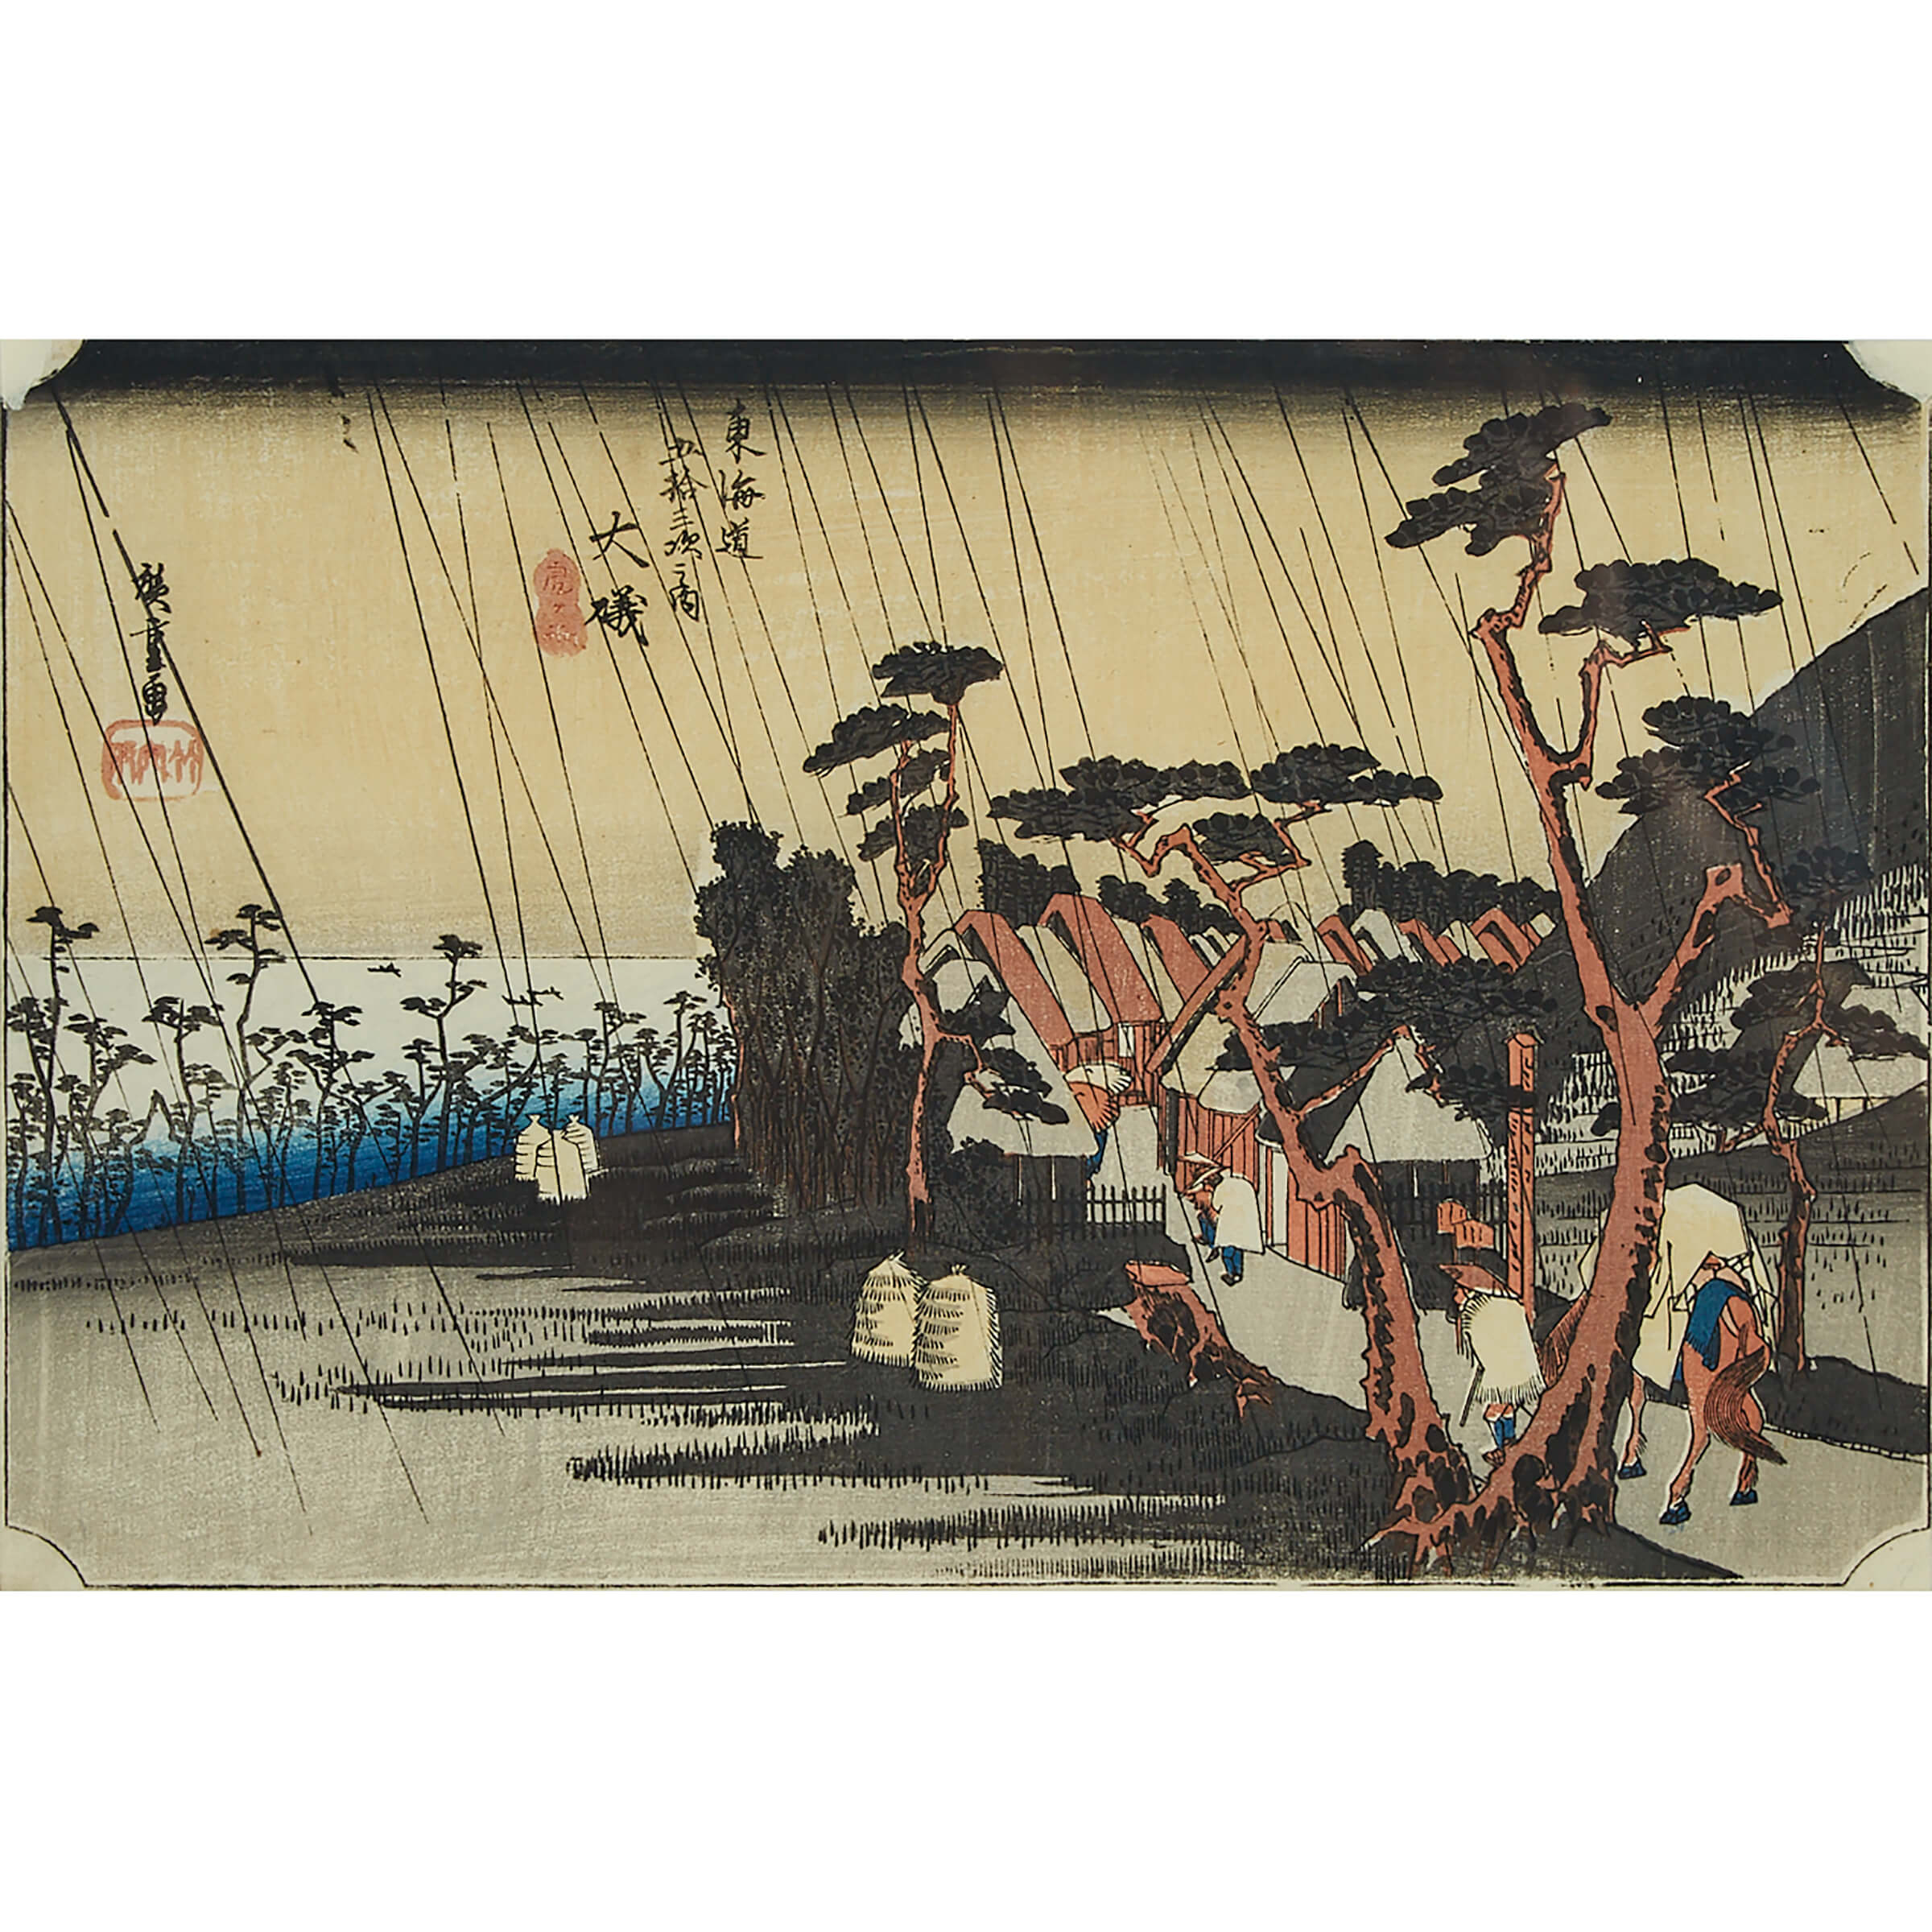 Utagawa Hiroshige (1797-1858), Oiso, Tora-ga-ame (Tora’s Rain)